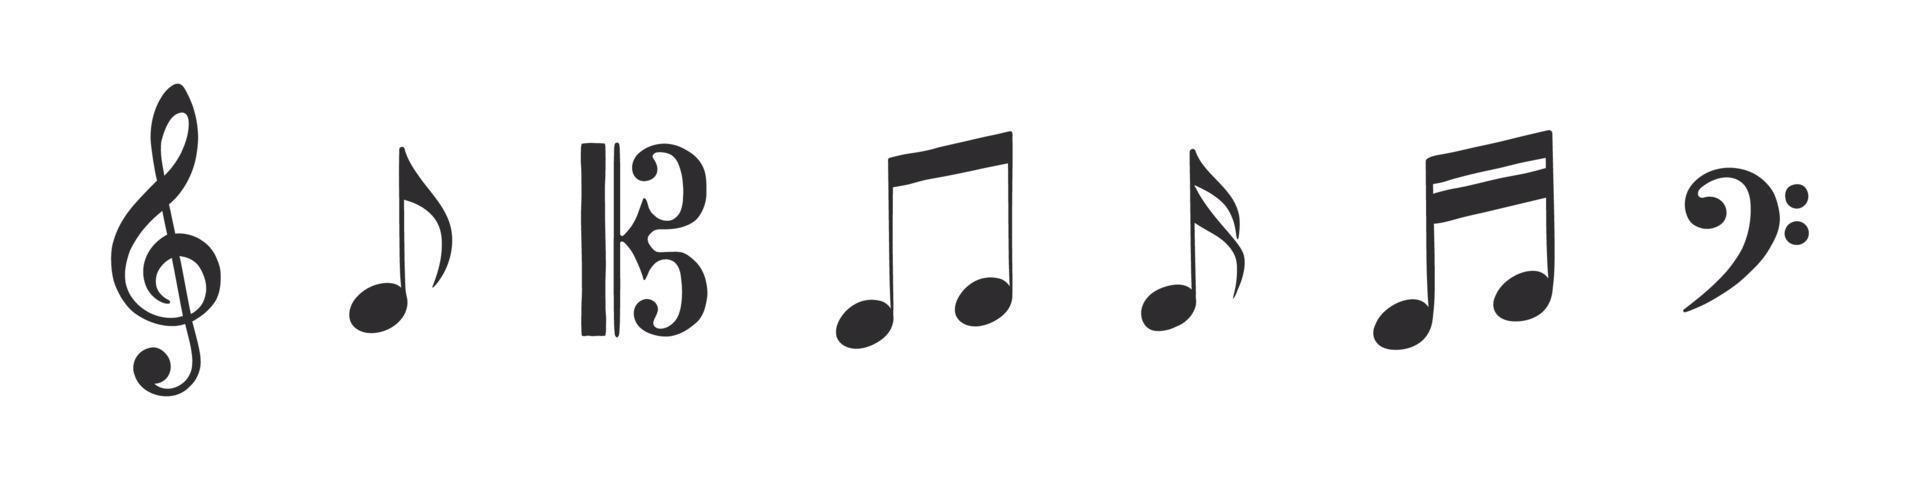 Music notes. Musical symbols set. Hand-drawn musical symbols in various variations. Vector illustration